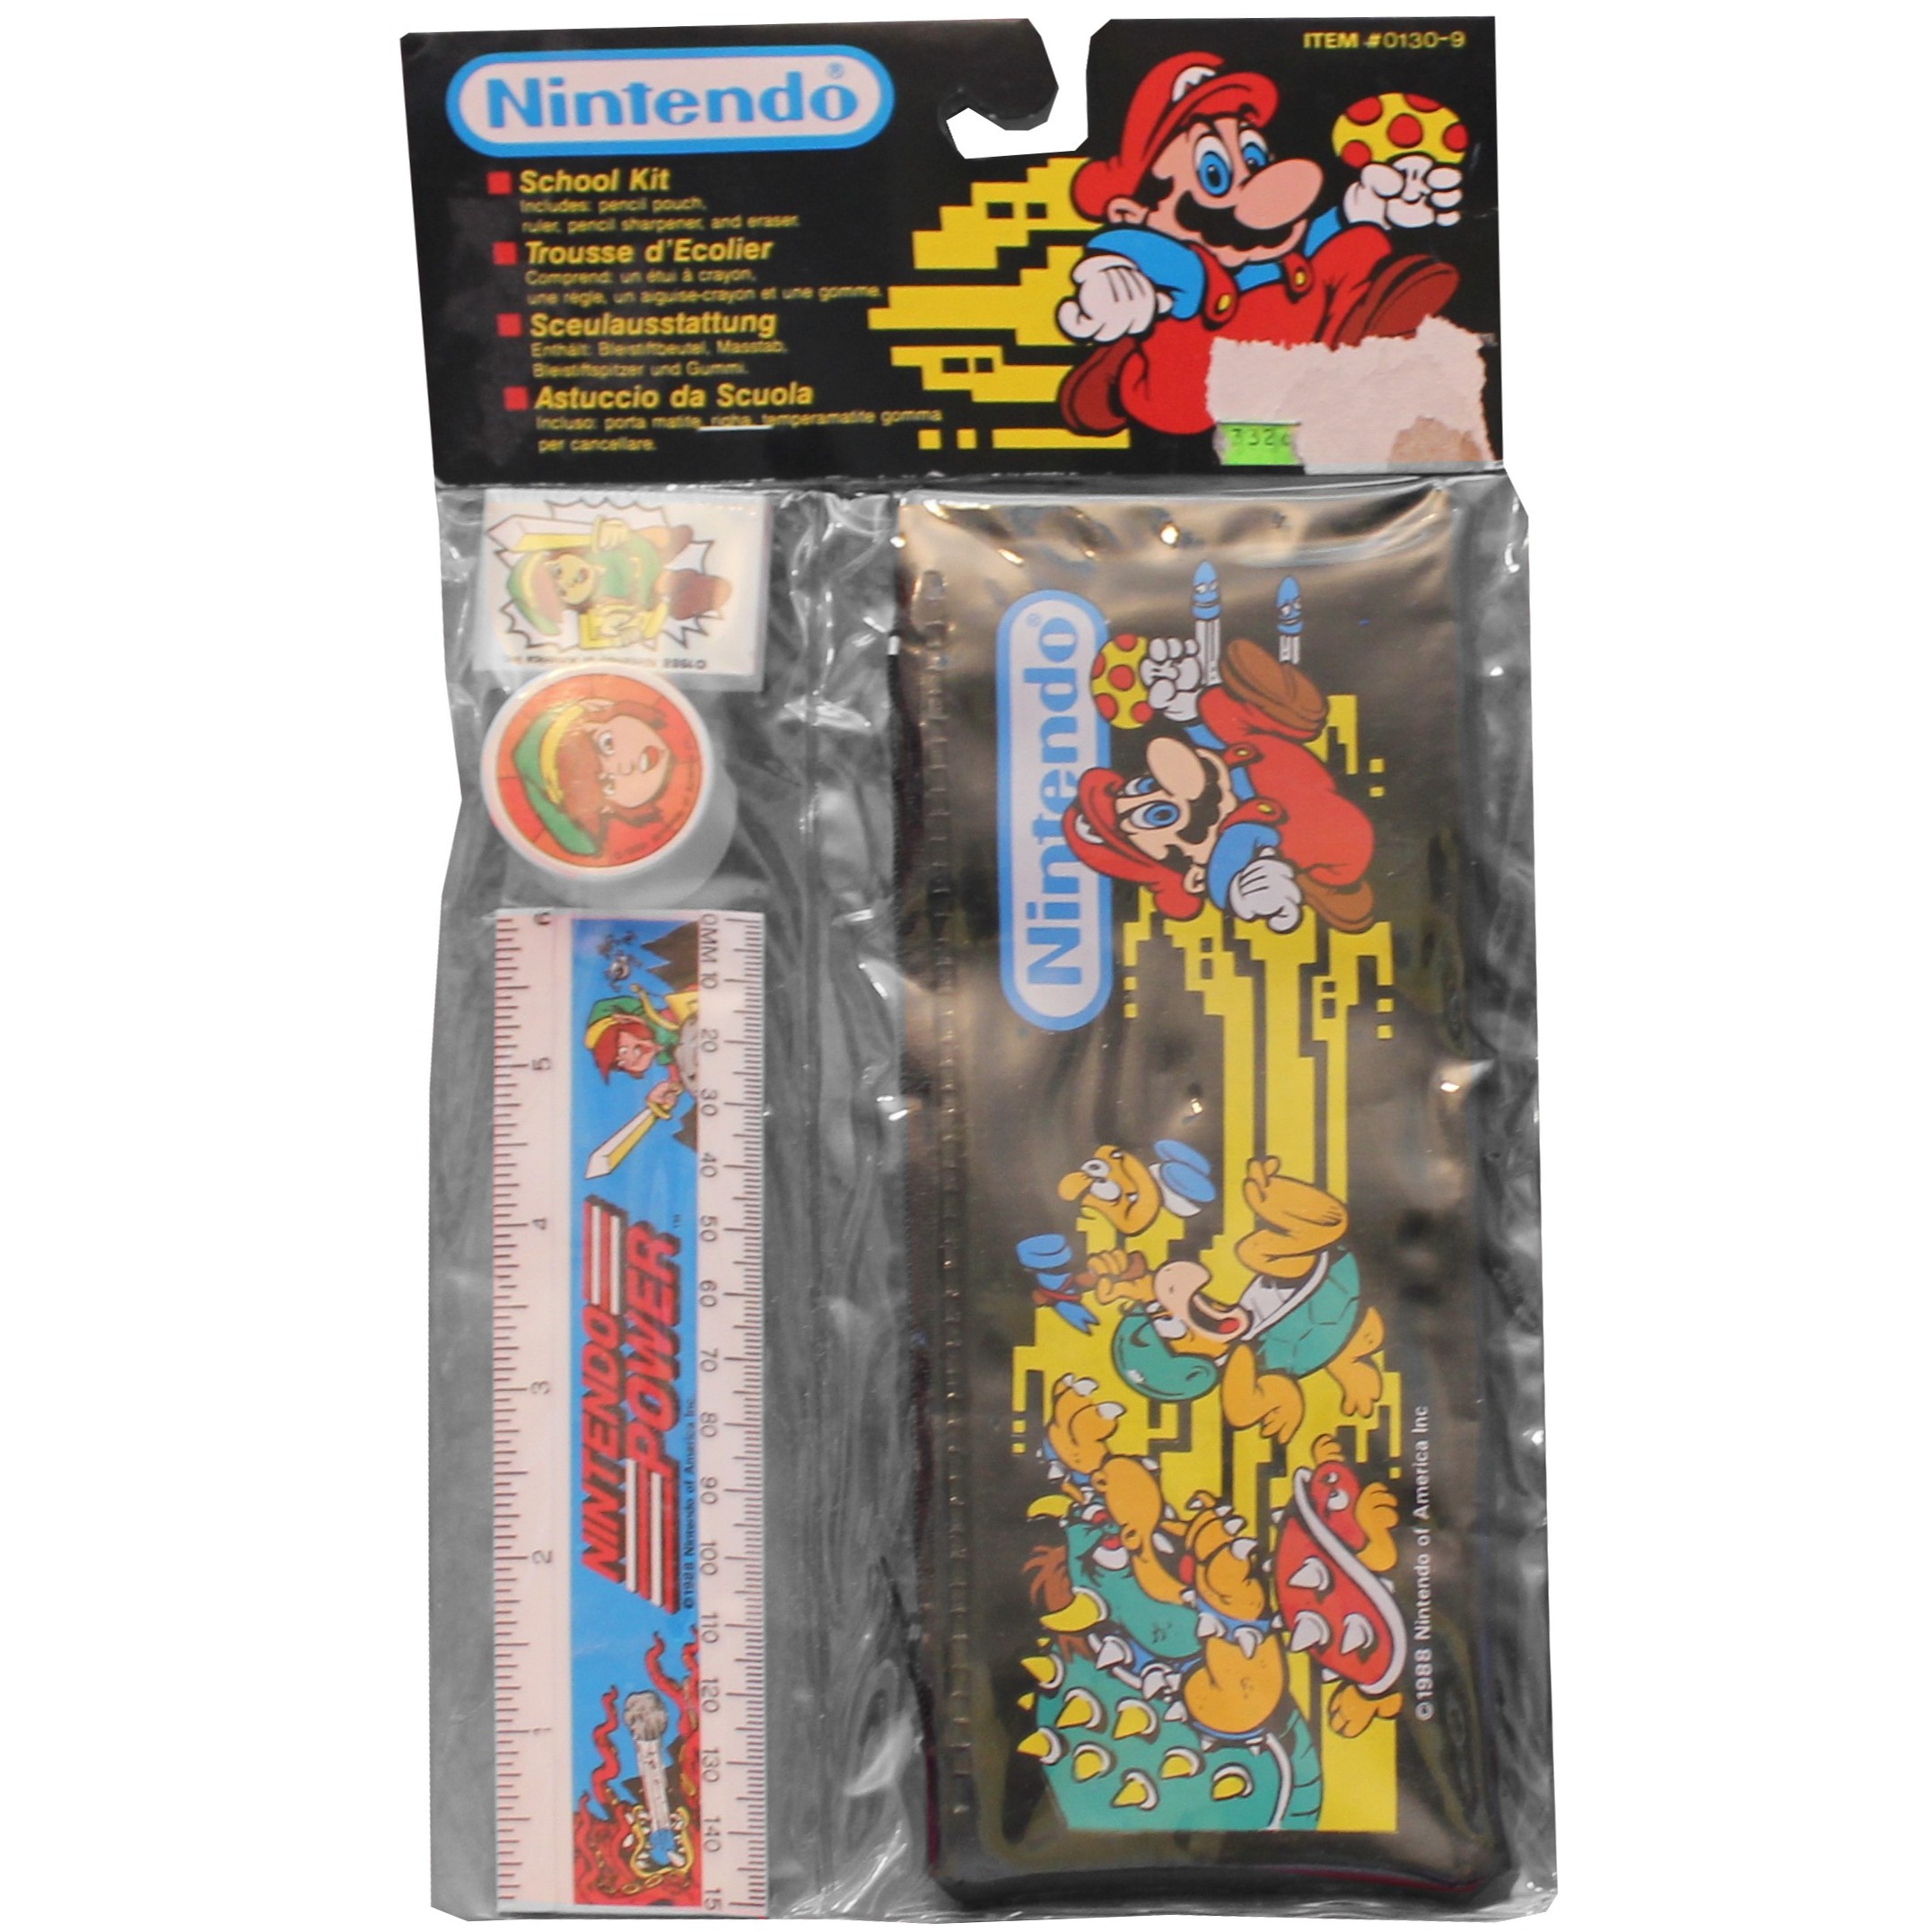 School Kit (Mario pencil case), USA 1989.